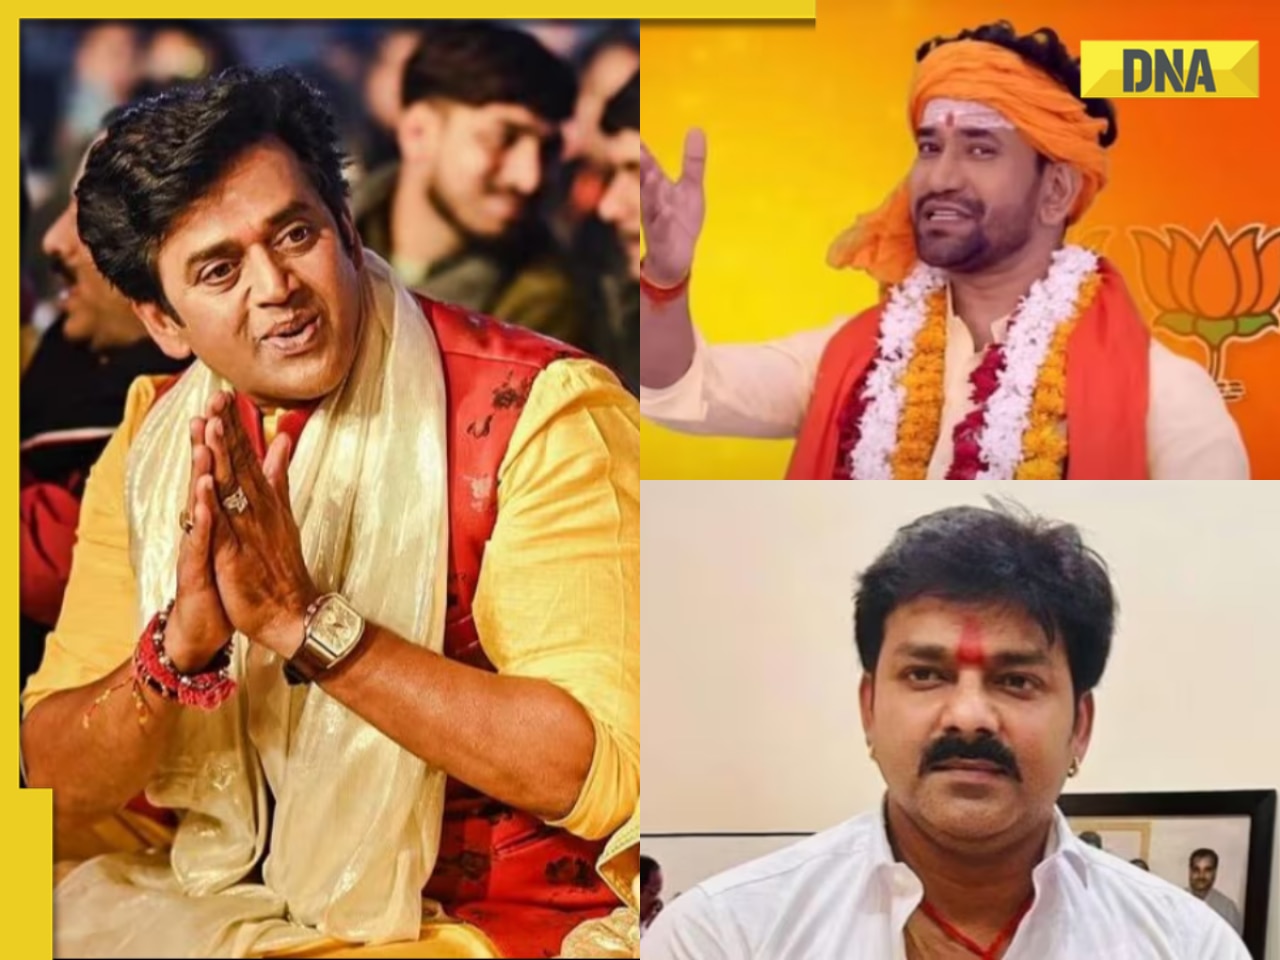 Mixed bag for Bhojpuri stars in elections: Ravi Kishan leads, Dinesh Lal Yadav 'Nirahua and Pawan Singh trail